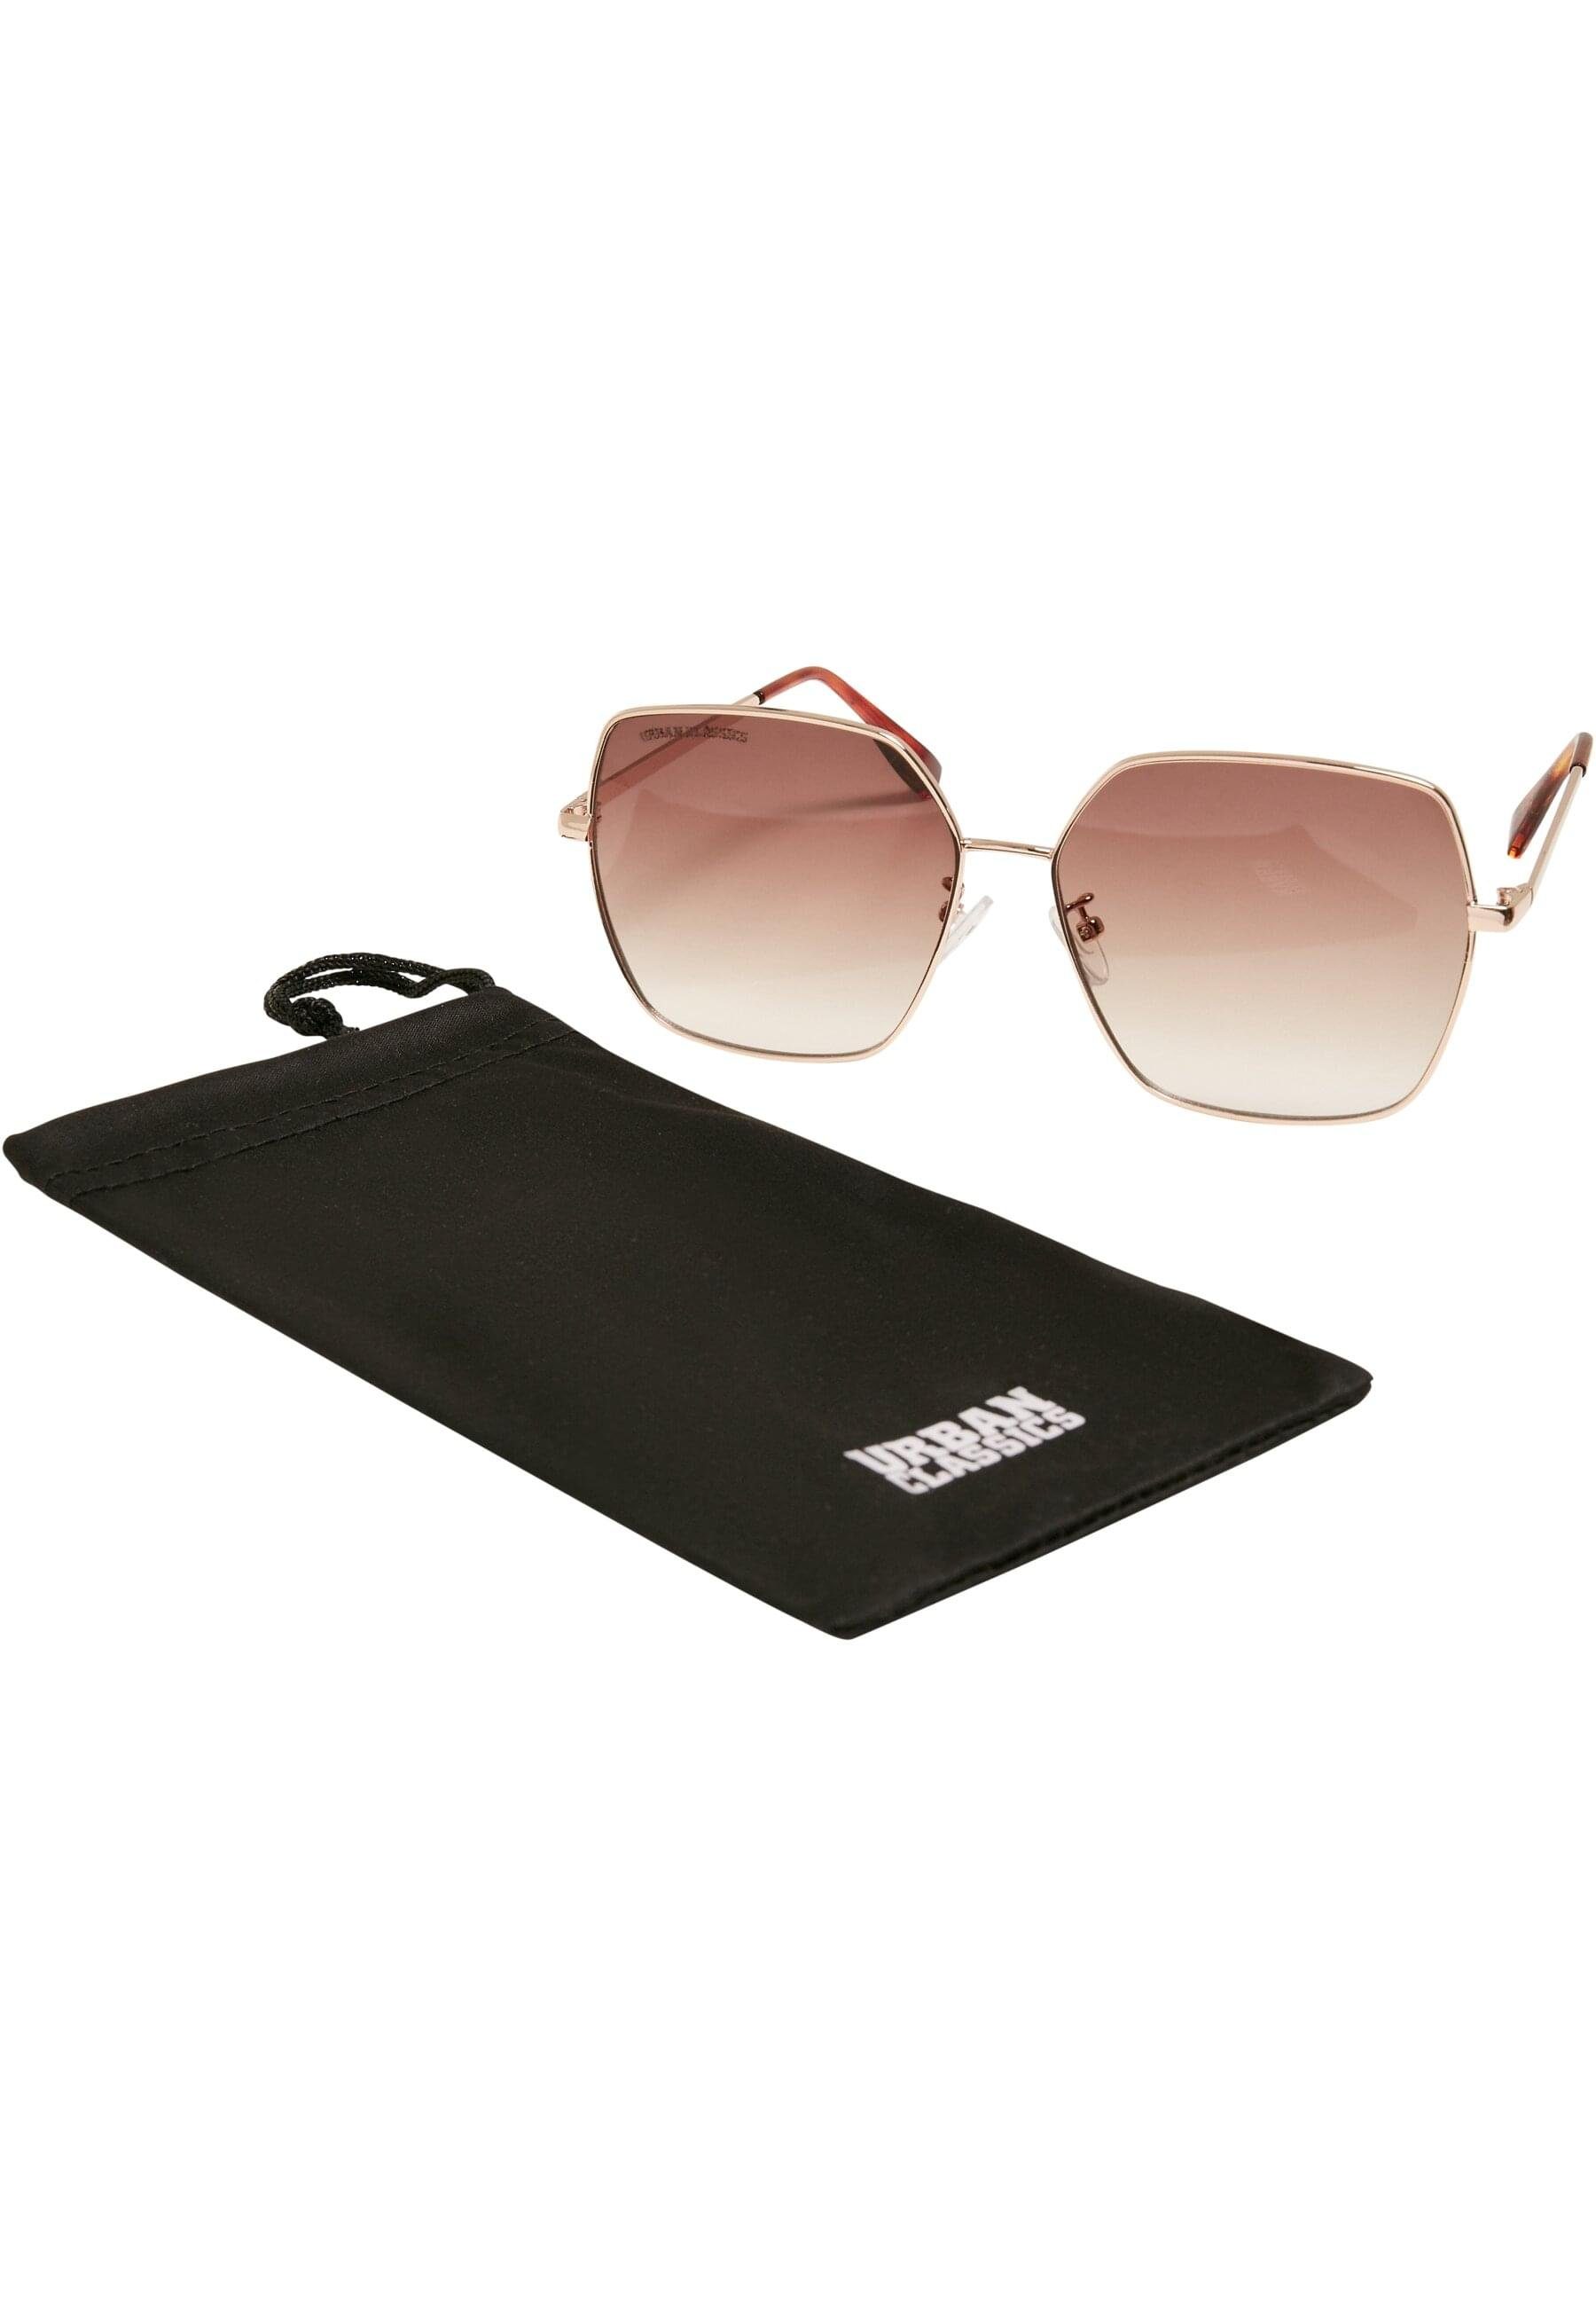 URBAN CLASSICS Sonnenbrille Unisex Sunglasses Indiana gold/brown